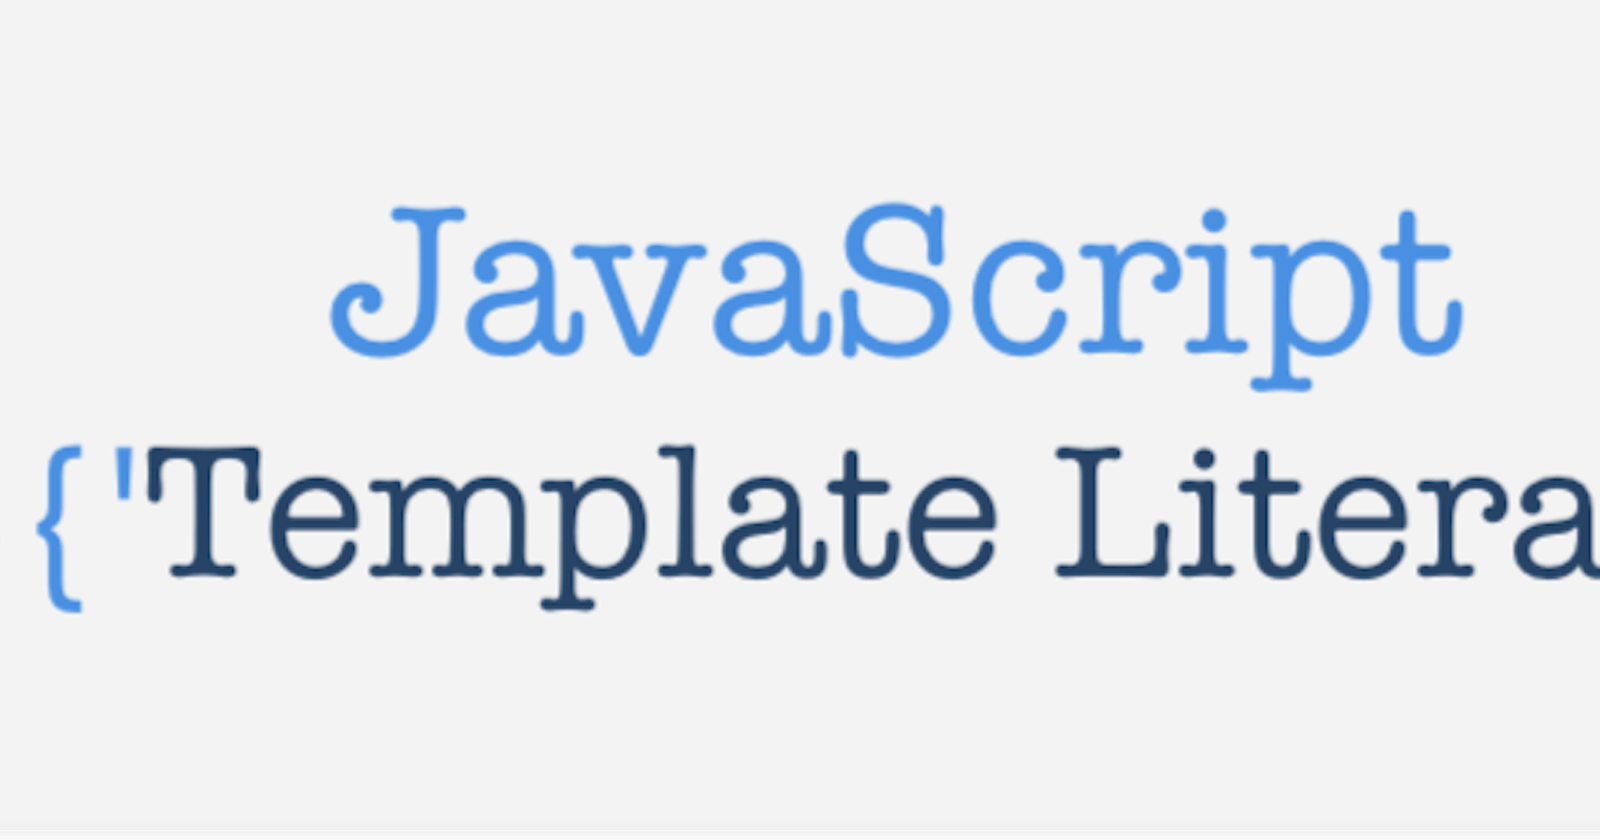 Template literals in JavaScript(ES6)